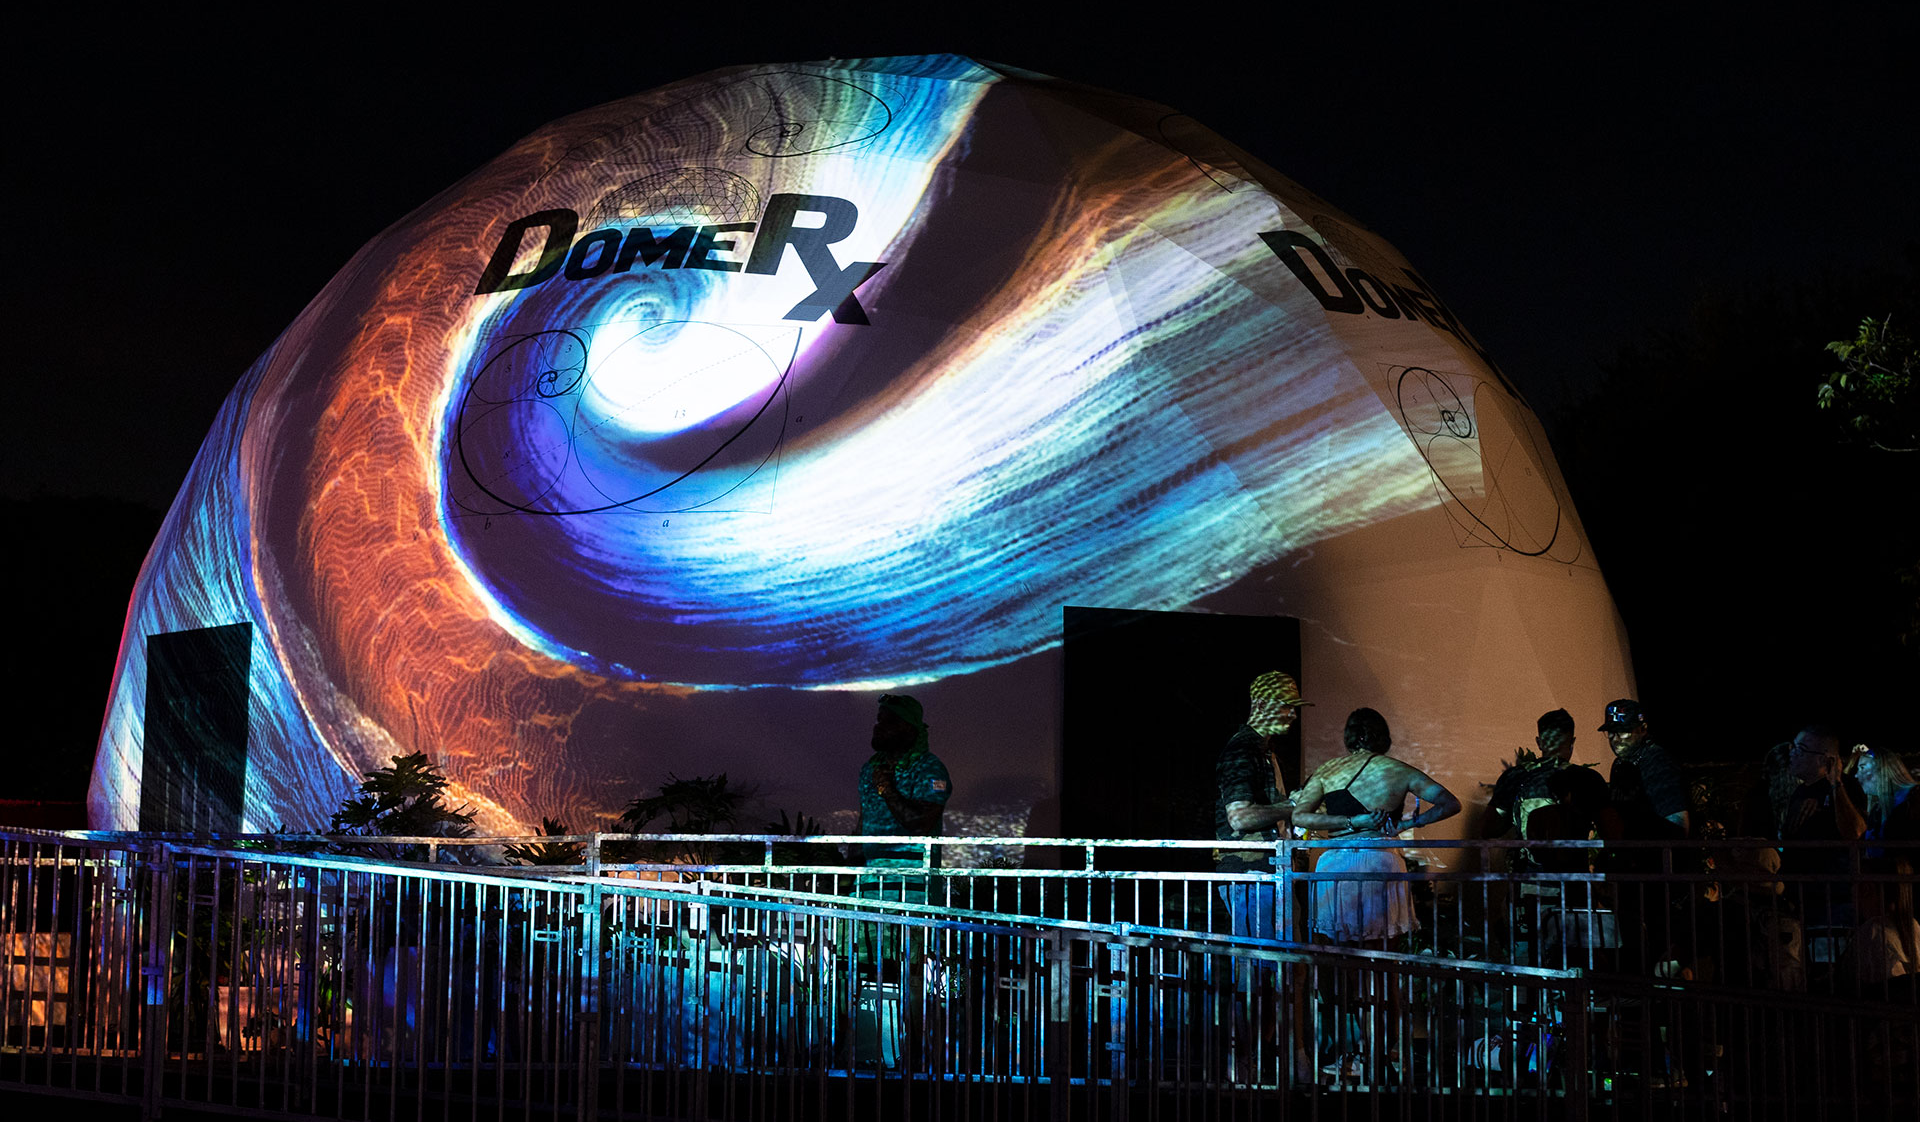 Immersive Festival Dome at Austin City Limits